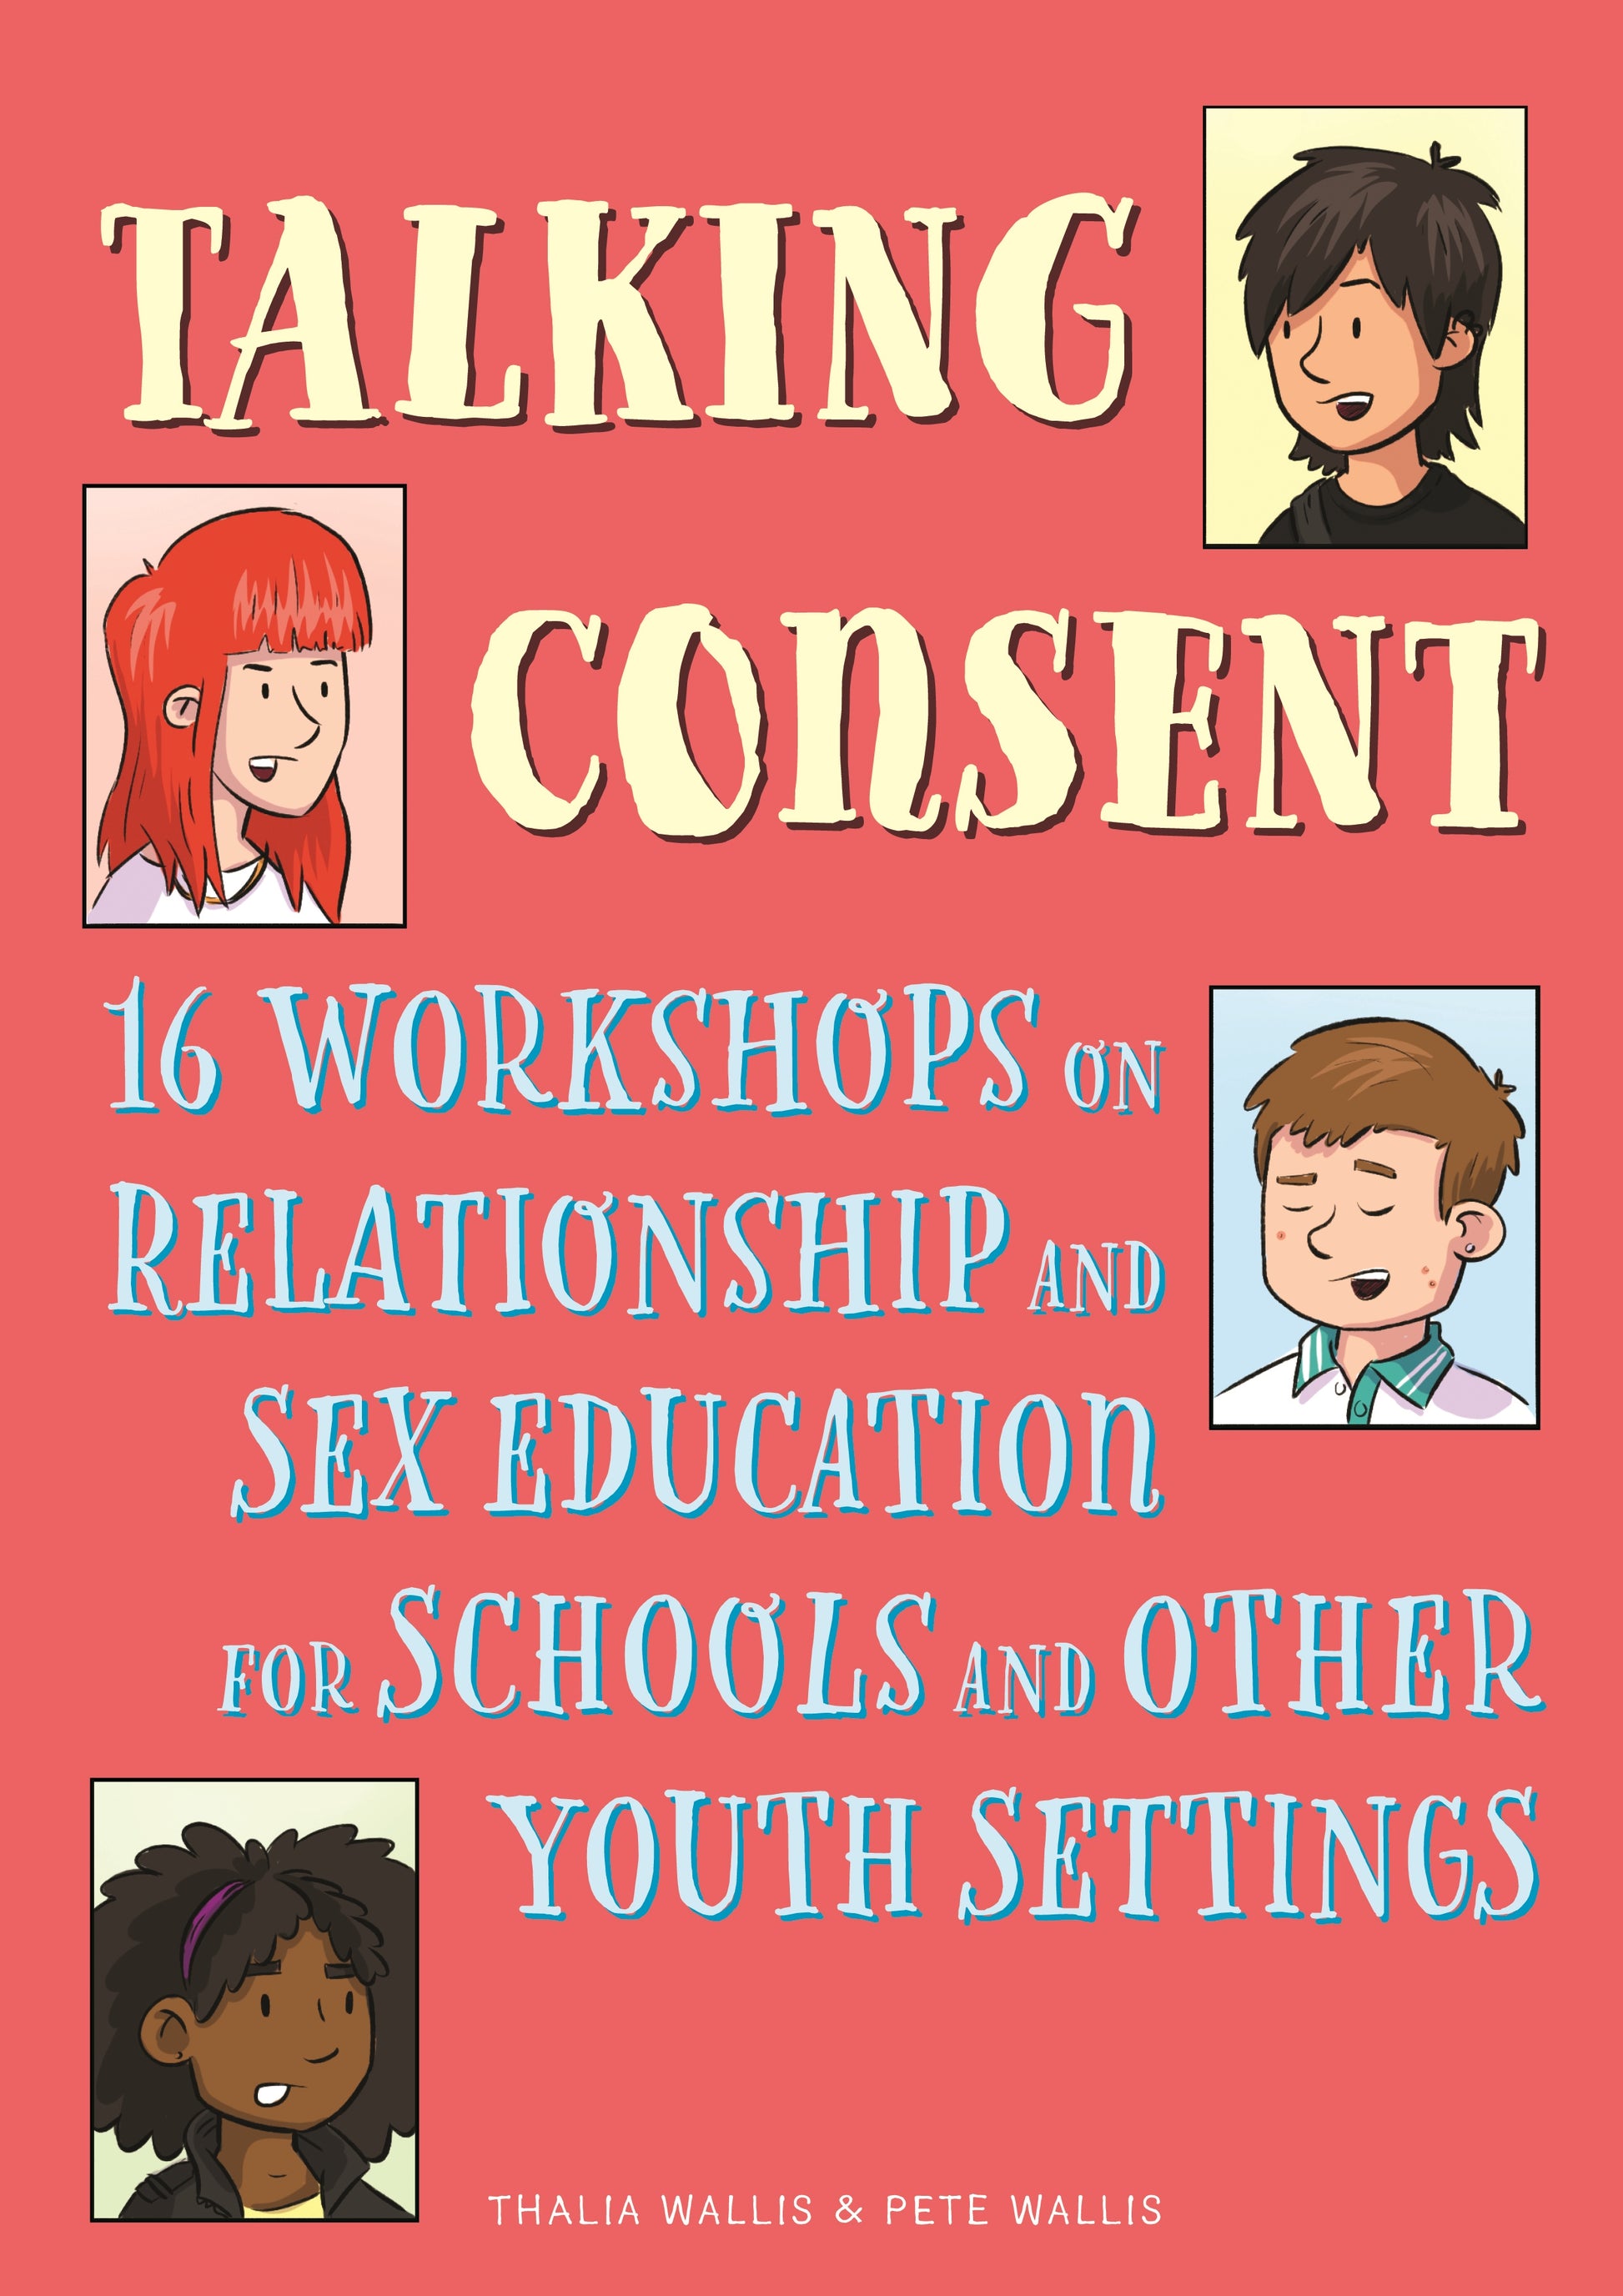 Talking Consent by Pete Wallis, Joseph Wilkins, Thalia Wallis